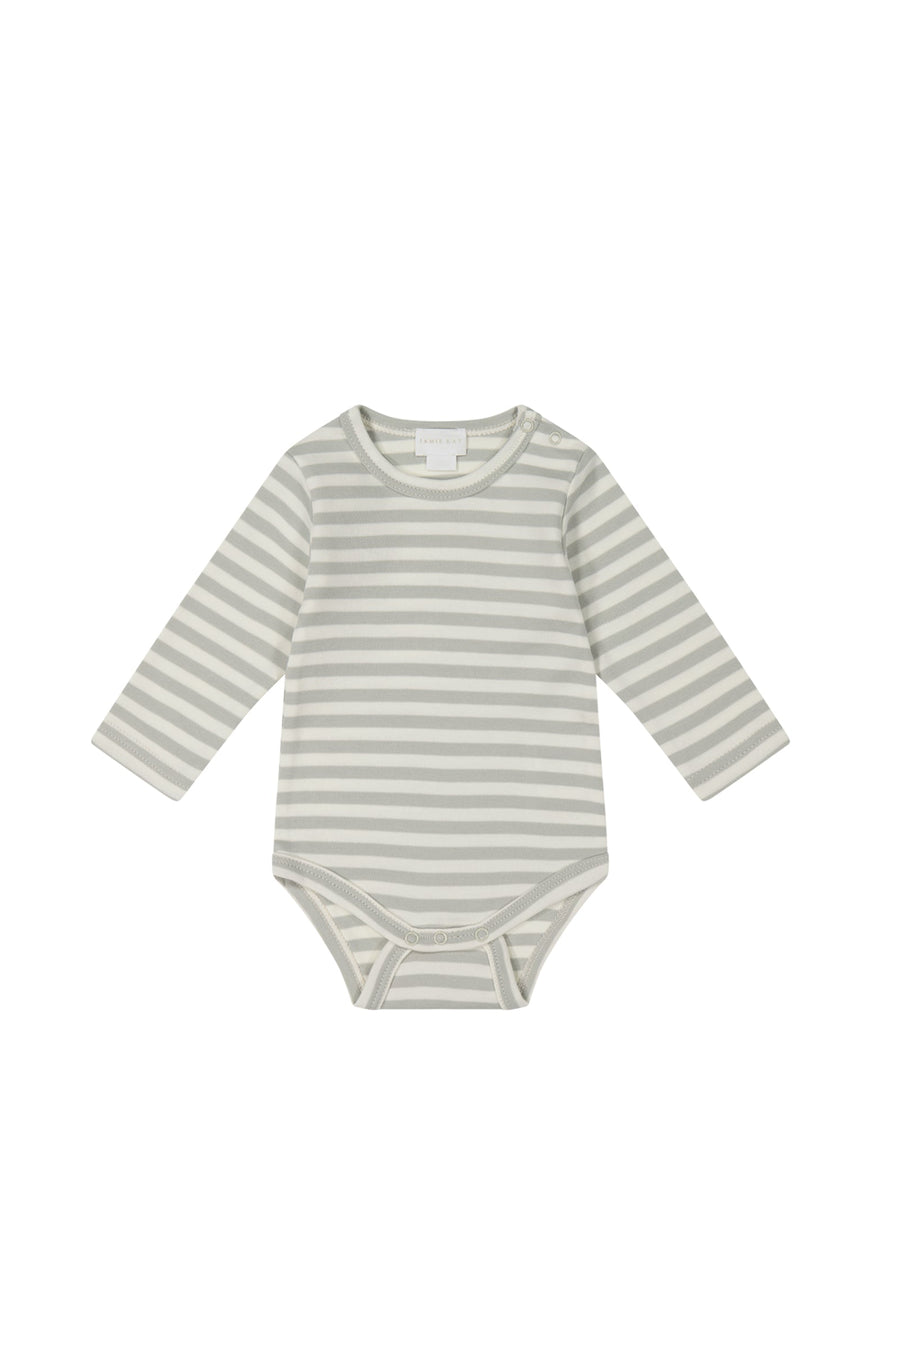 Pima Cotton Fernley Long Sleeve Bodysuit - Mineral/Cloud Stripe Childrens Bodysuit from Jamie Kay USA